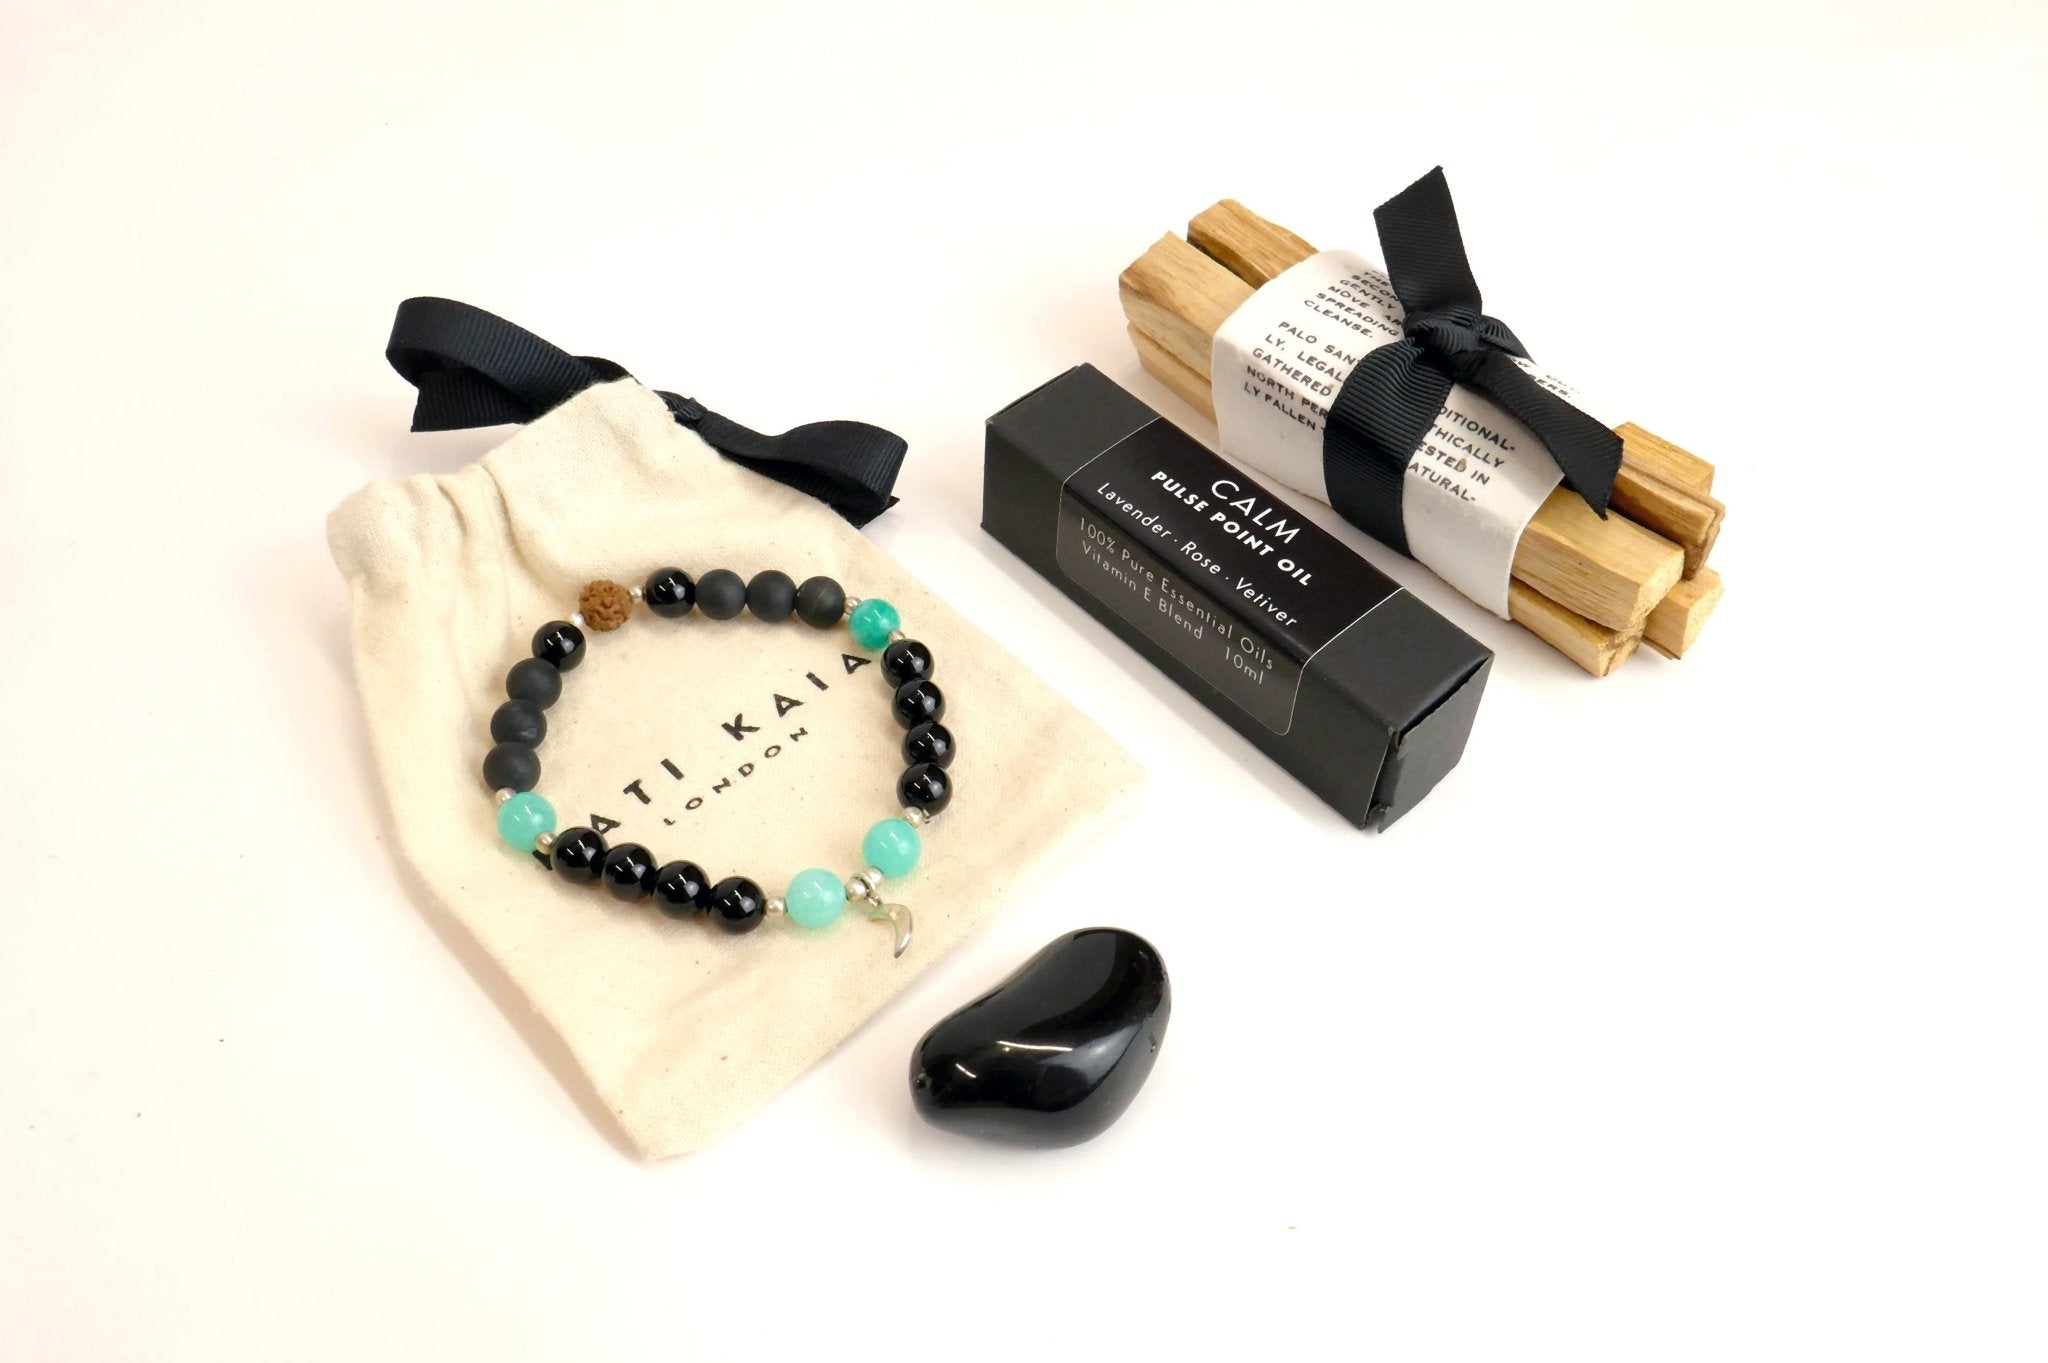 New! Mala Nyx Bracelet & Palo Santo Gift Box - Kati Kaia - UK